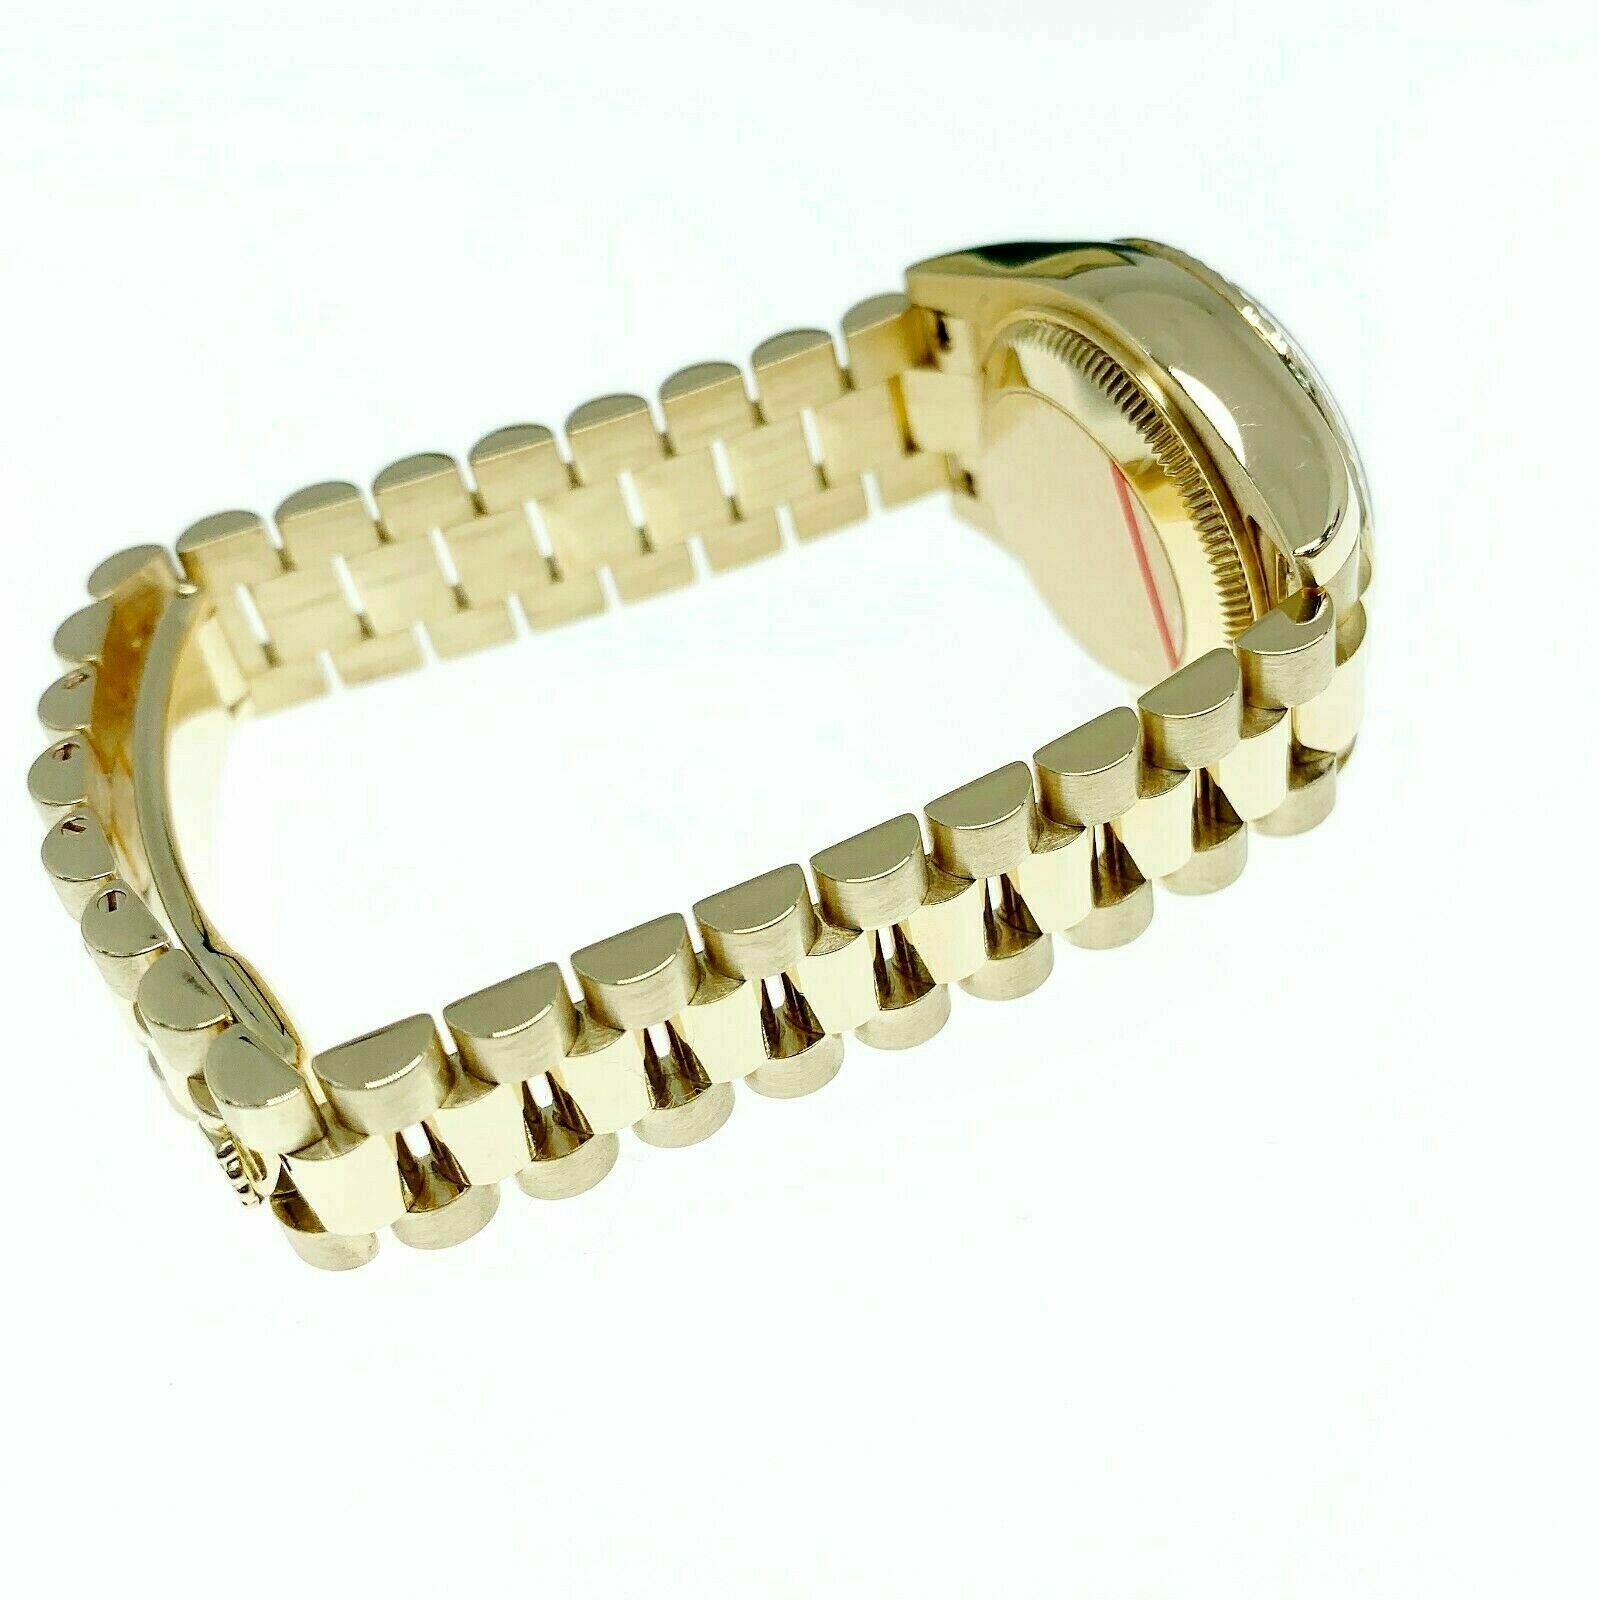 Rolex 26MM Lady President 18 Karat Yellow Gold Watch Ref # 179178 F Serial